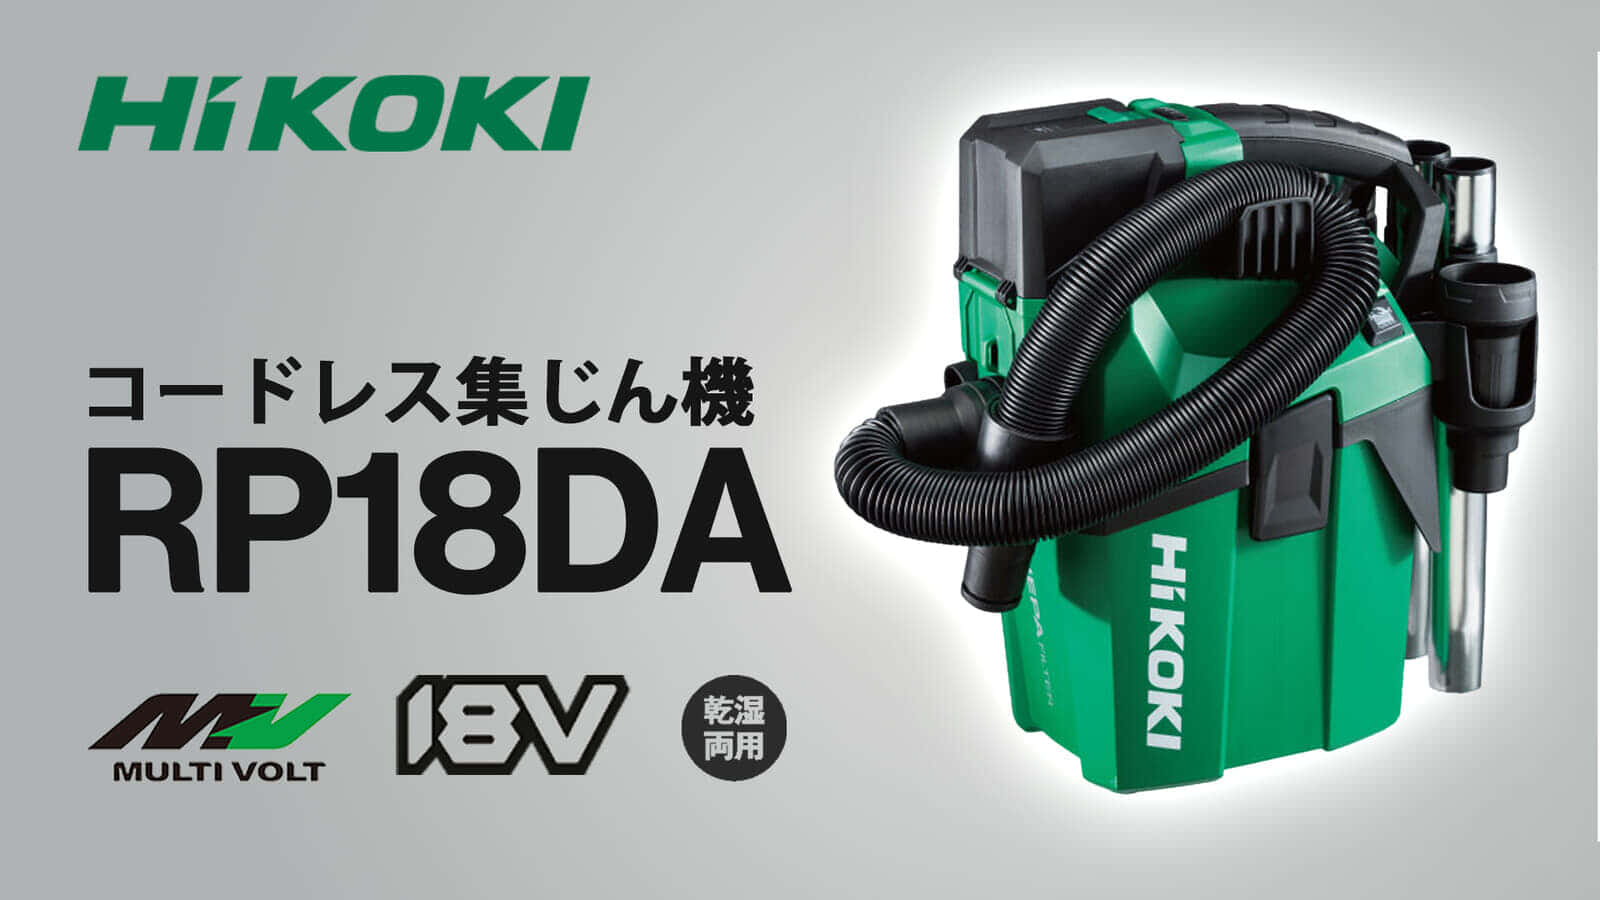 HiKOKI RP18DA コードレス集じん機を発売、排気がキレイで軽量なコードレスモデル